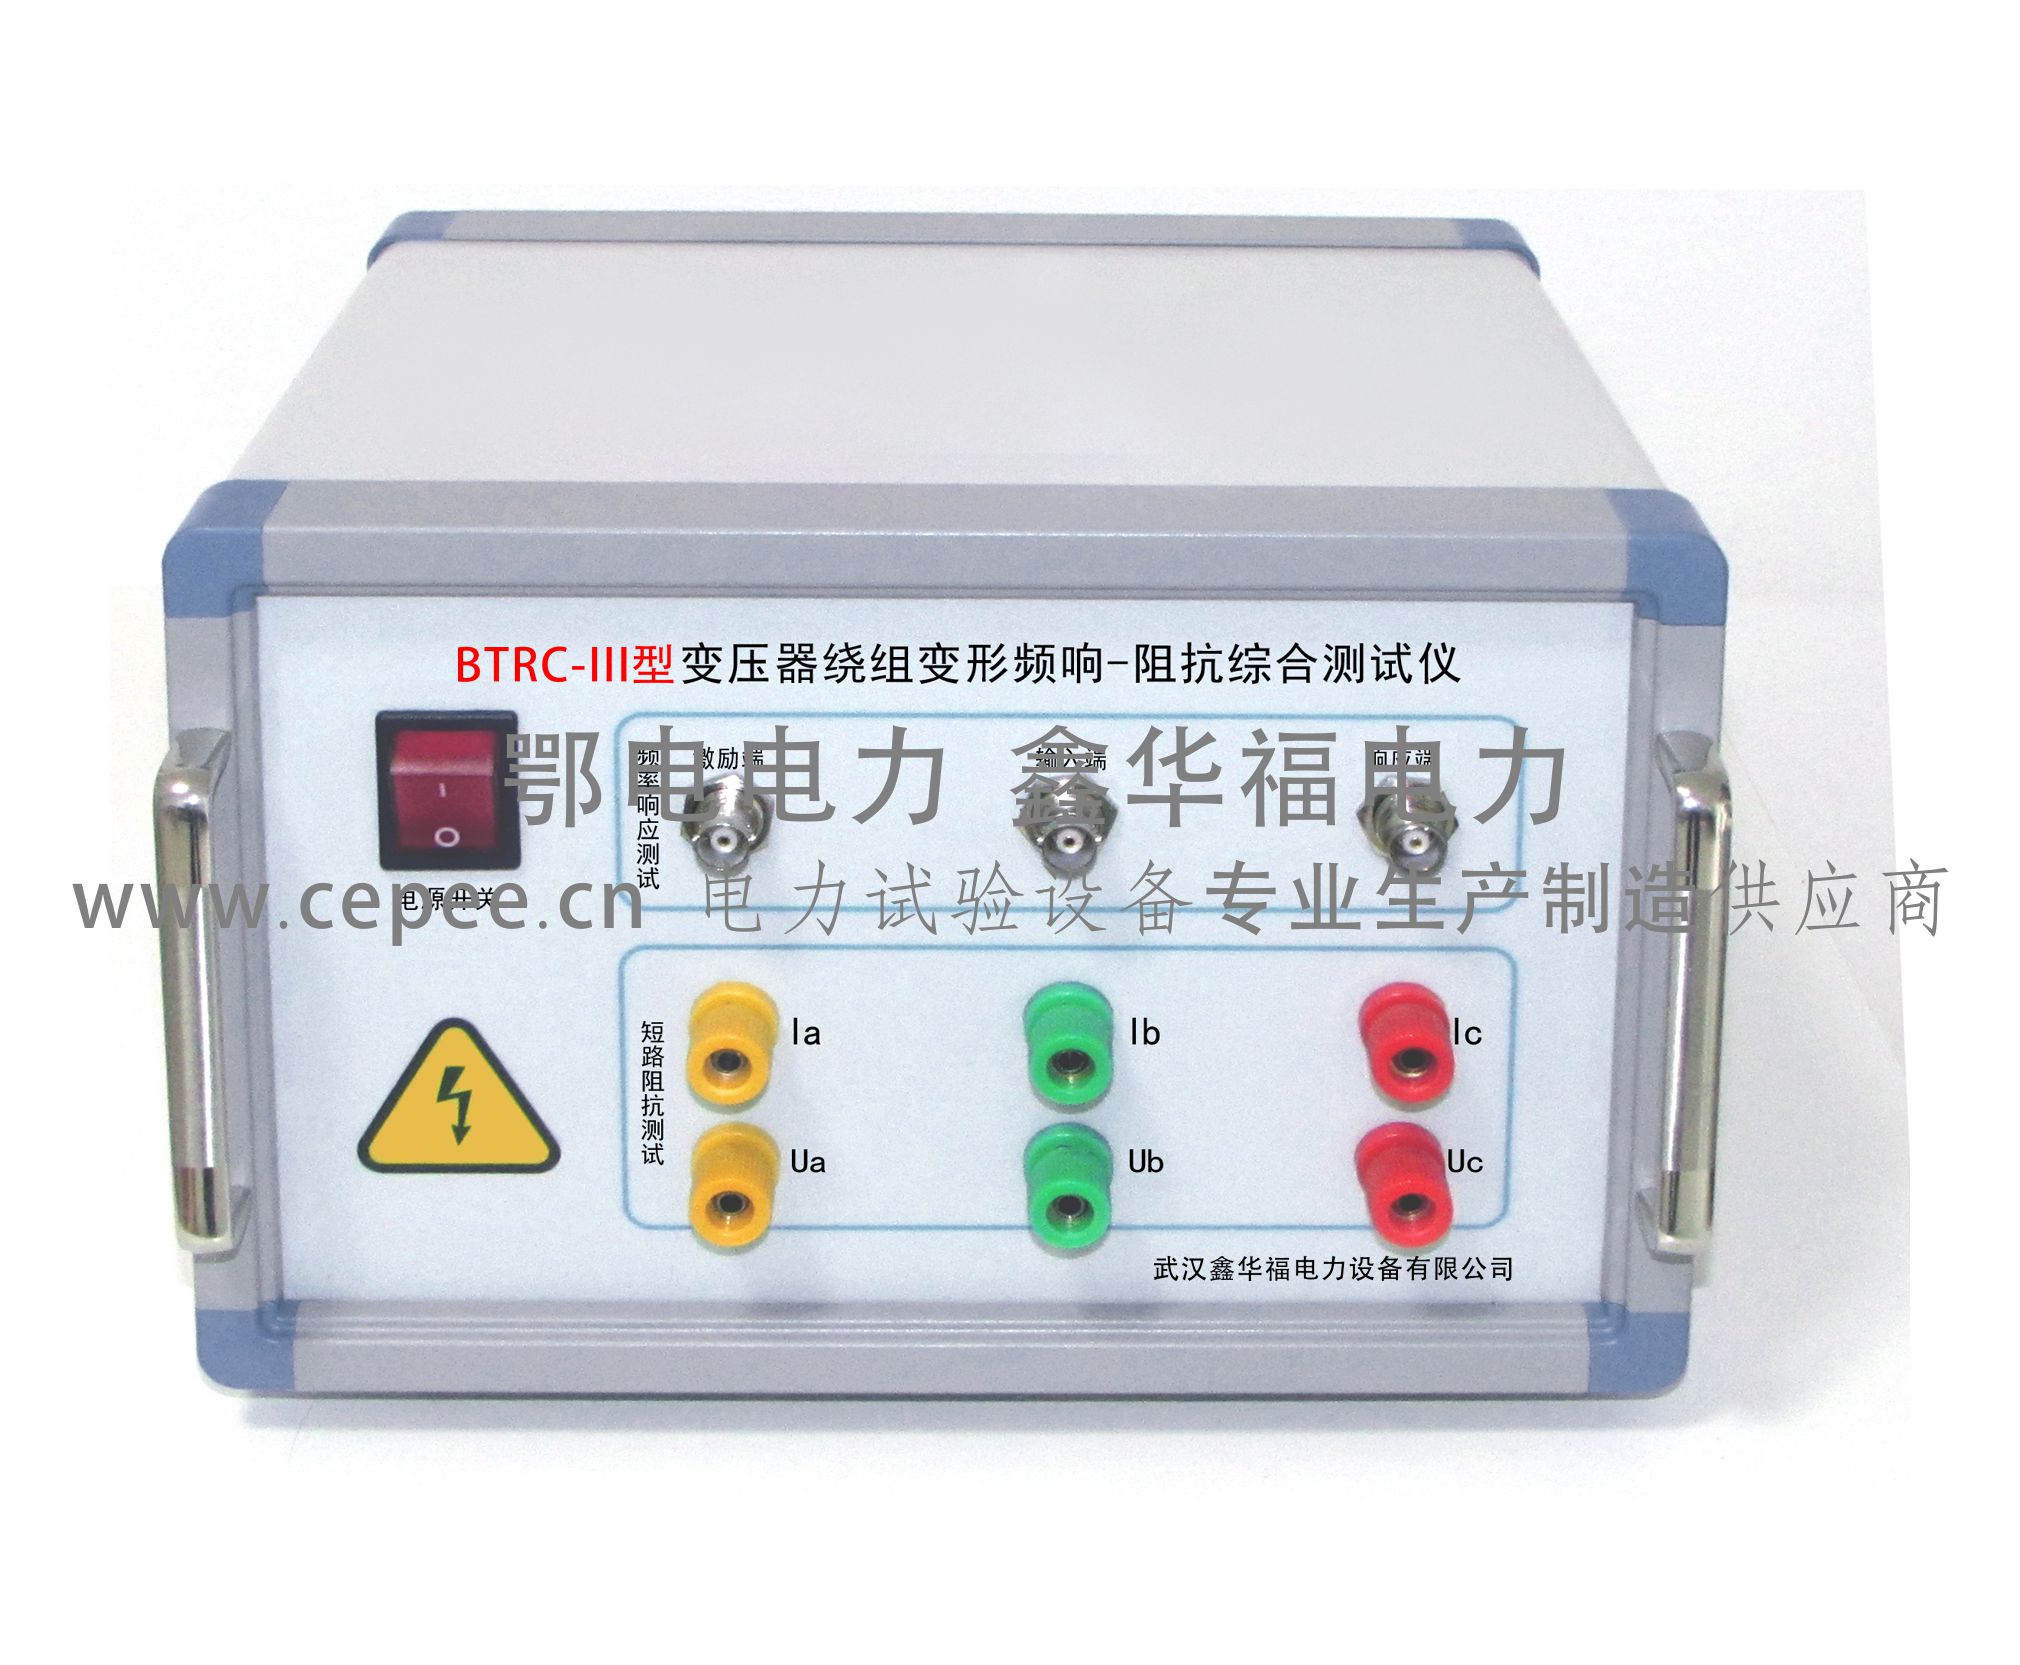 BRTC-II型变压器绕组变形测试仪